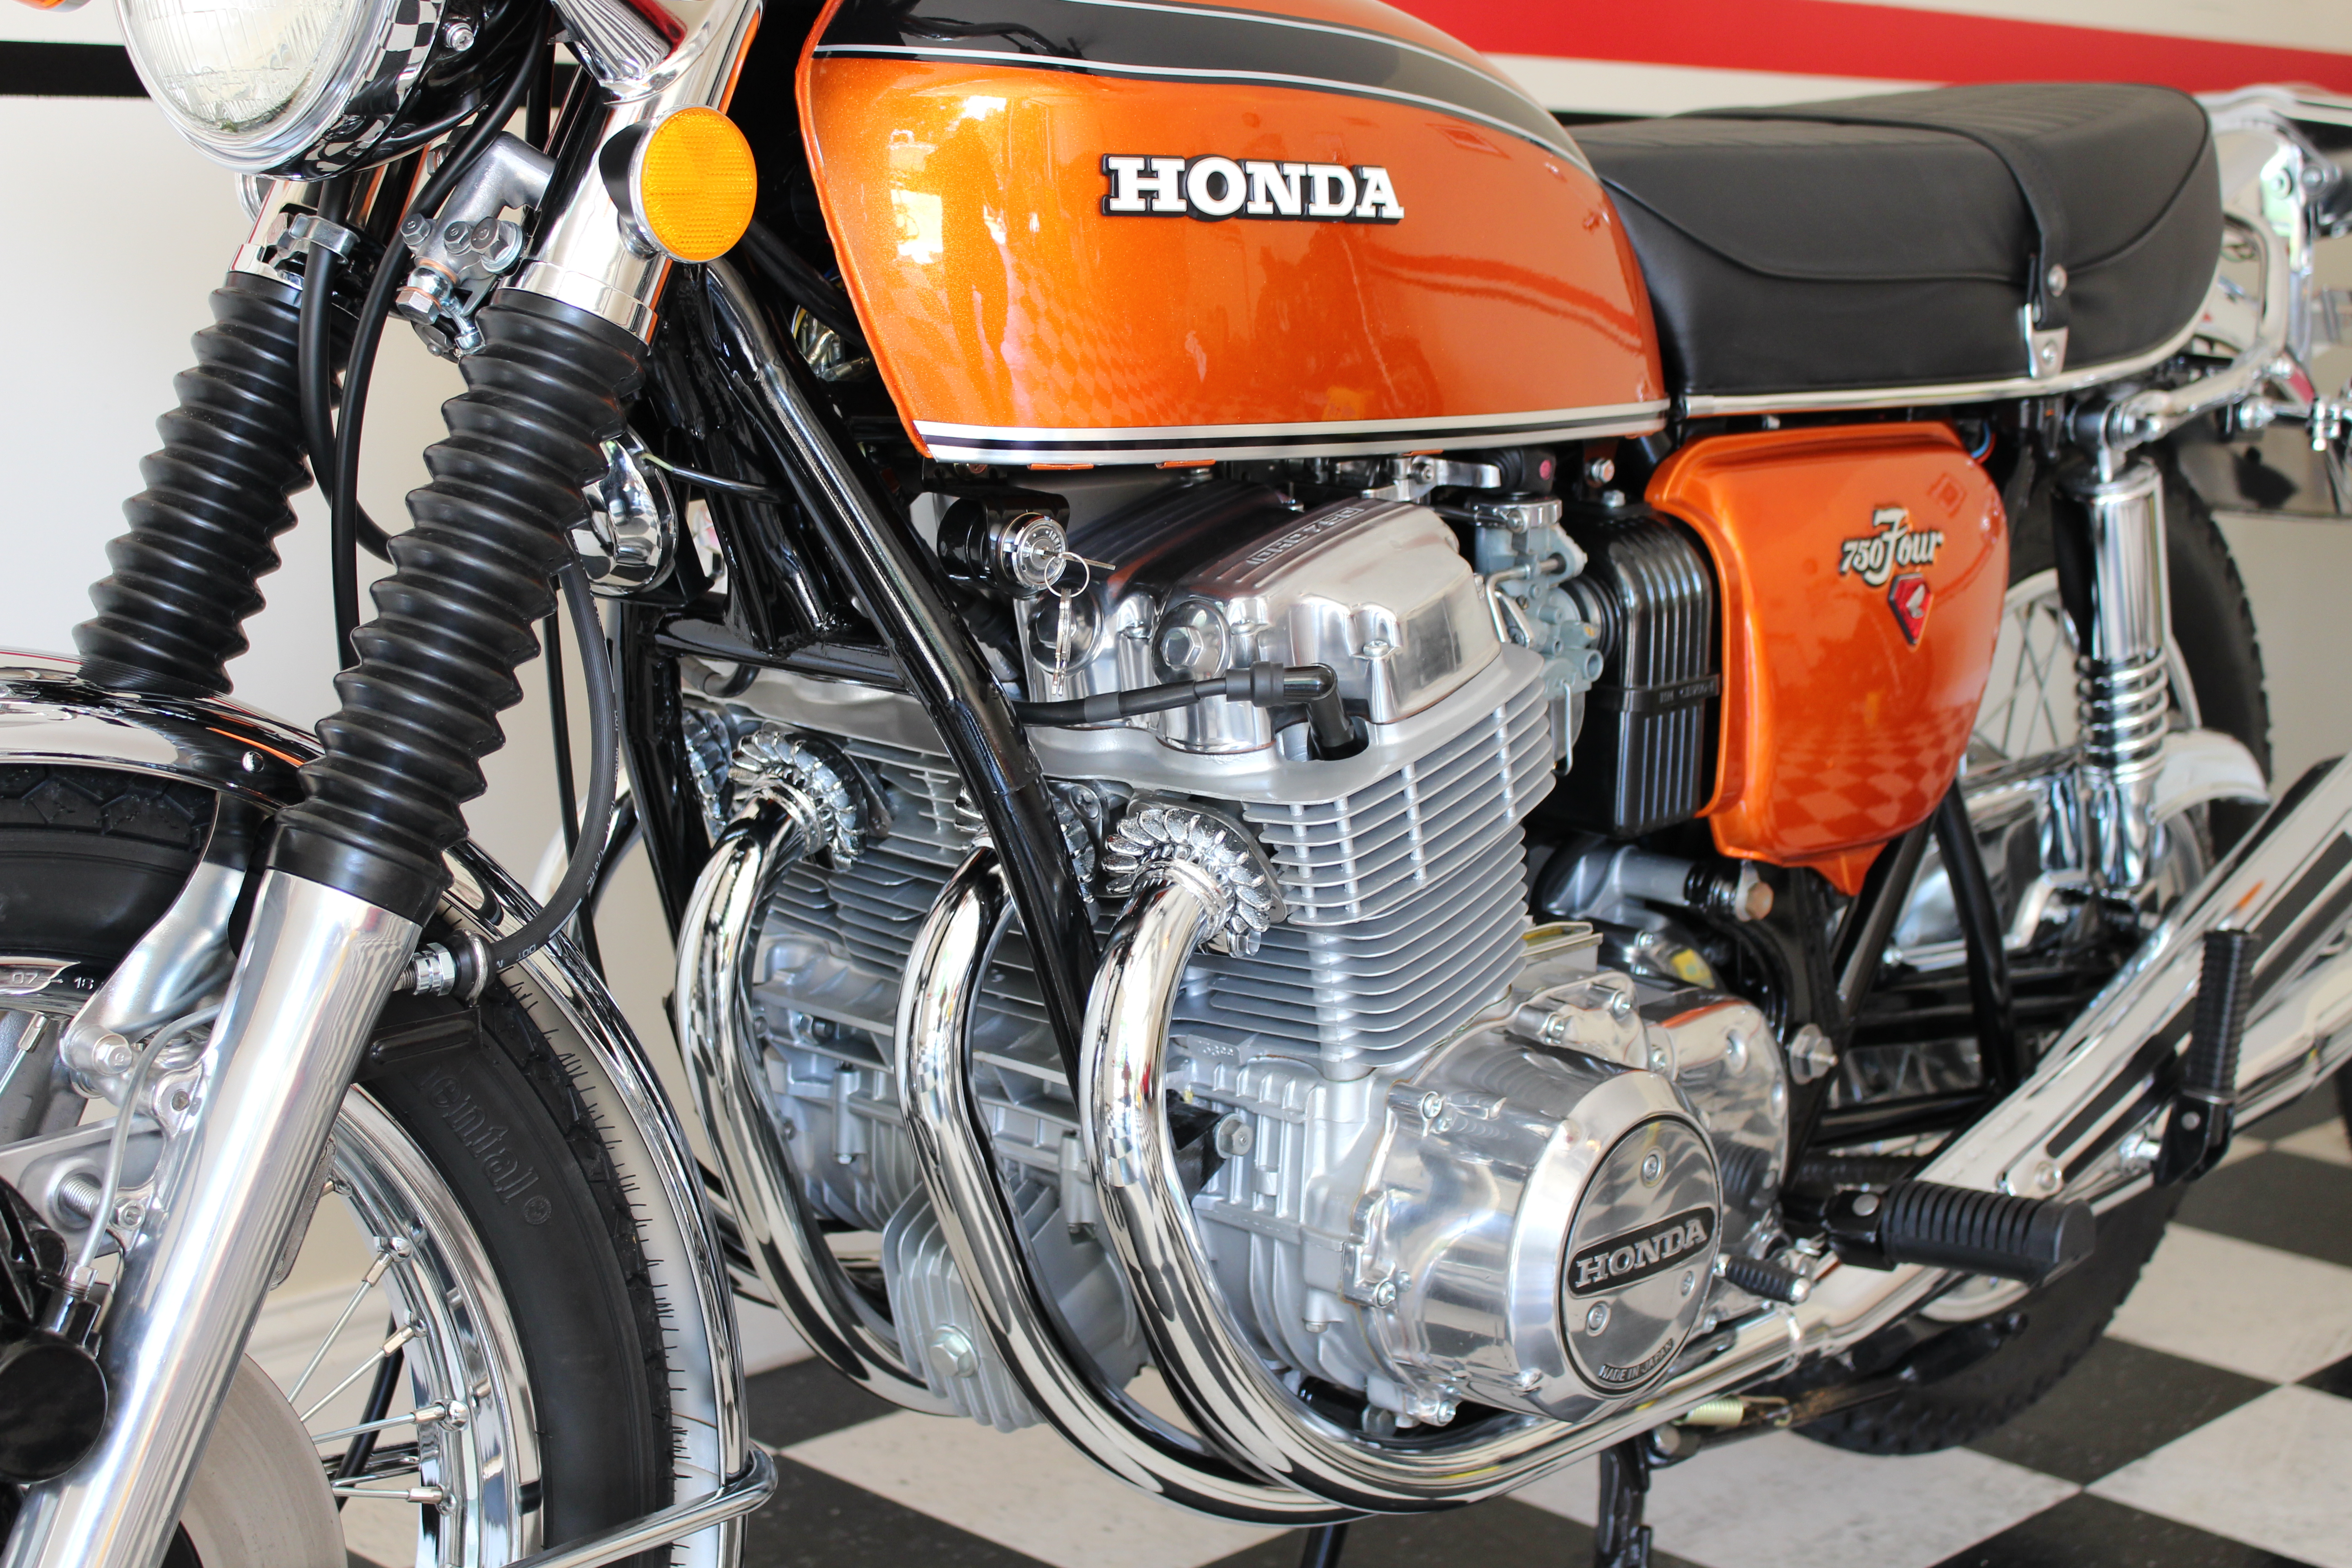 1972 Honda 750 orange right side